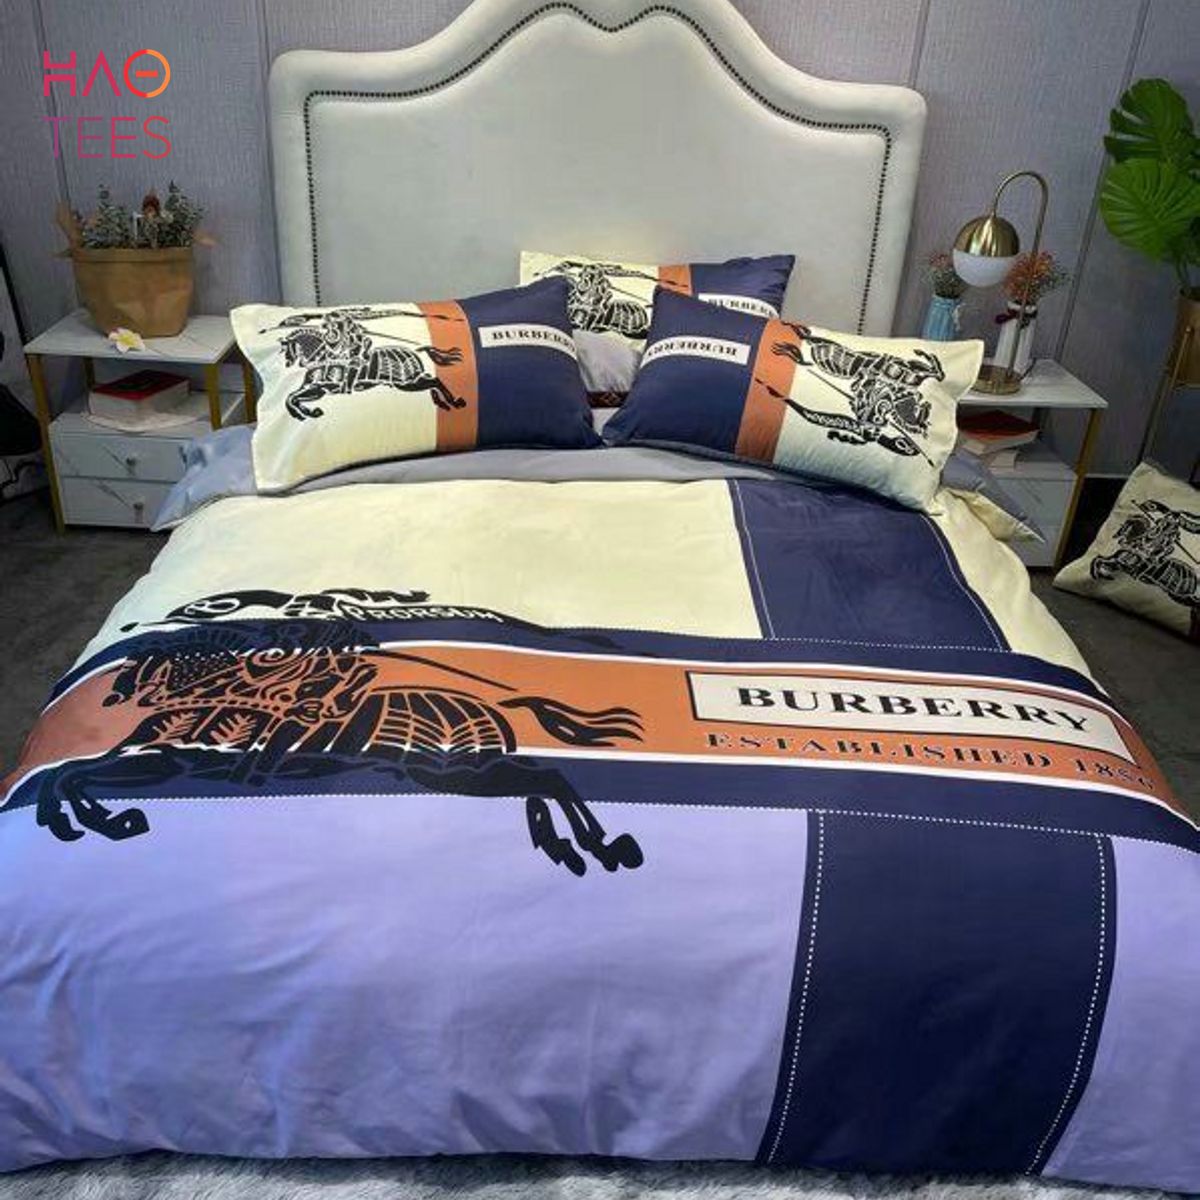 Burberry Established 1856 Mix Orange Blue Duvet Cover Luxury Color Bedding Set